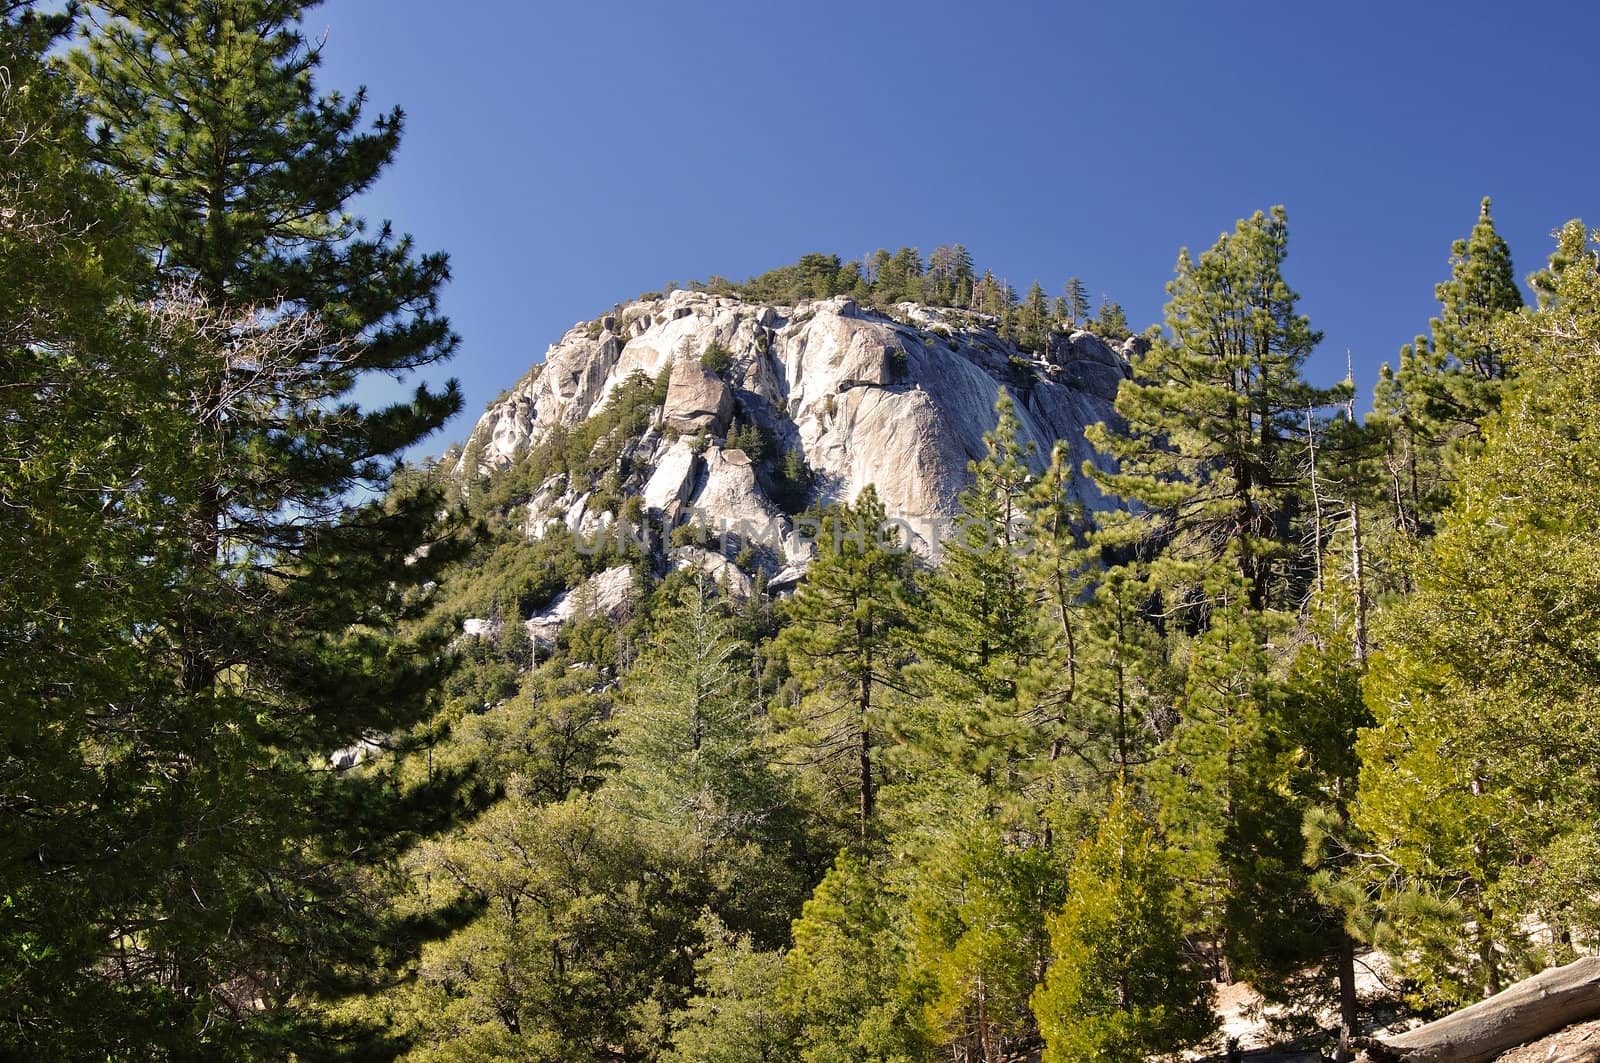 View of a granite peak on Mount San Jacinto in Southern California.